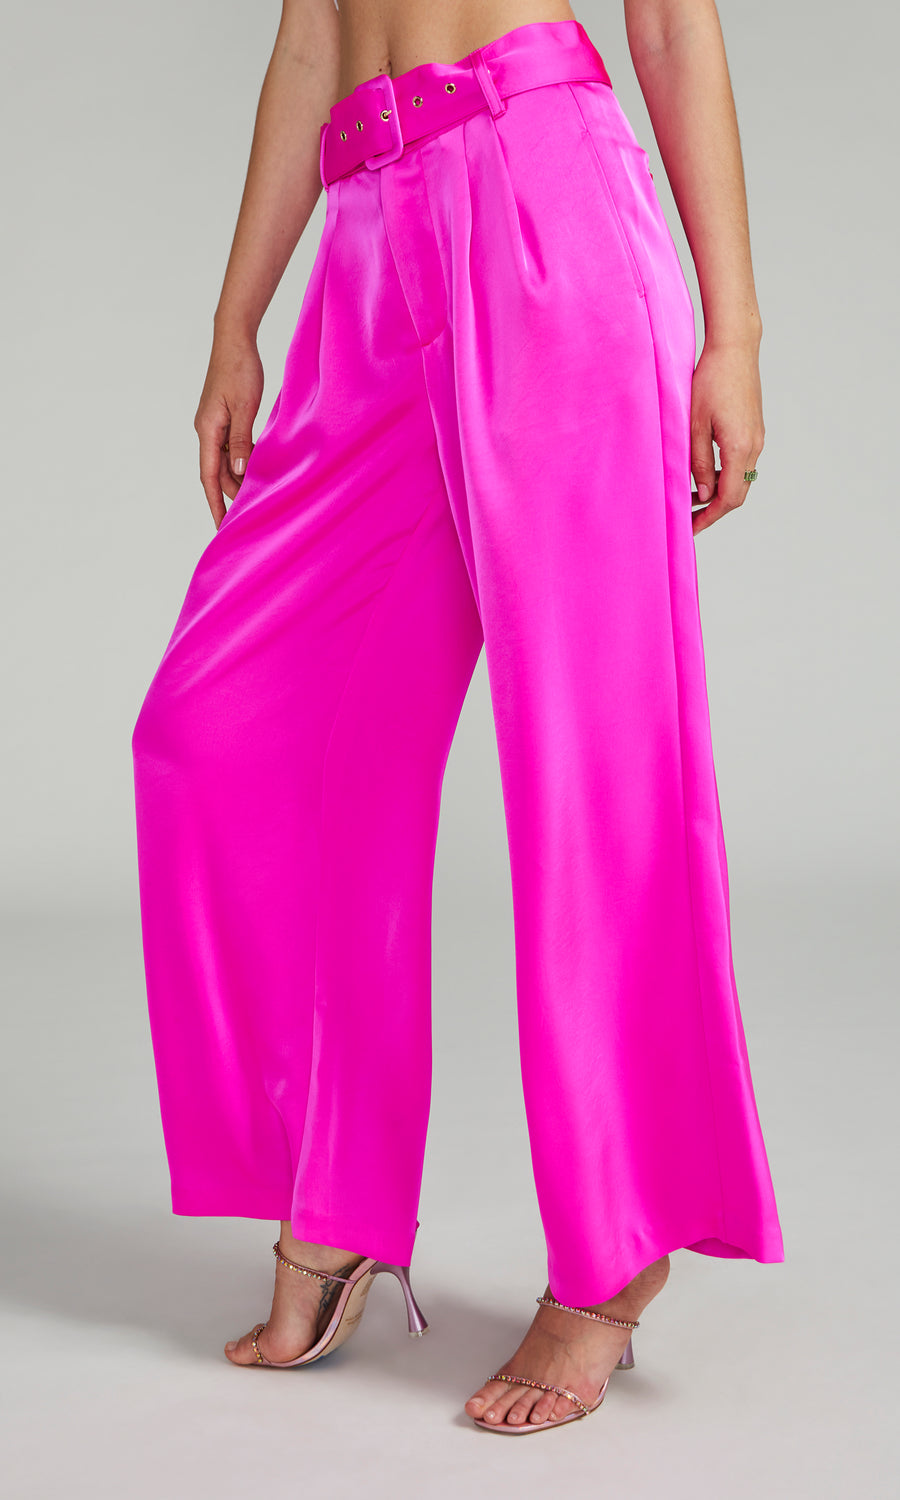 Eloise Satin Pants - Hot Pink 